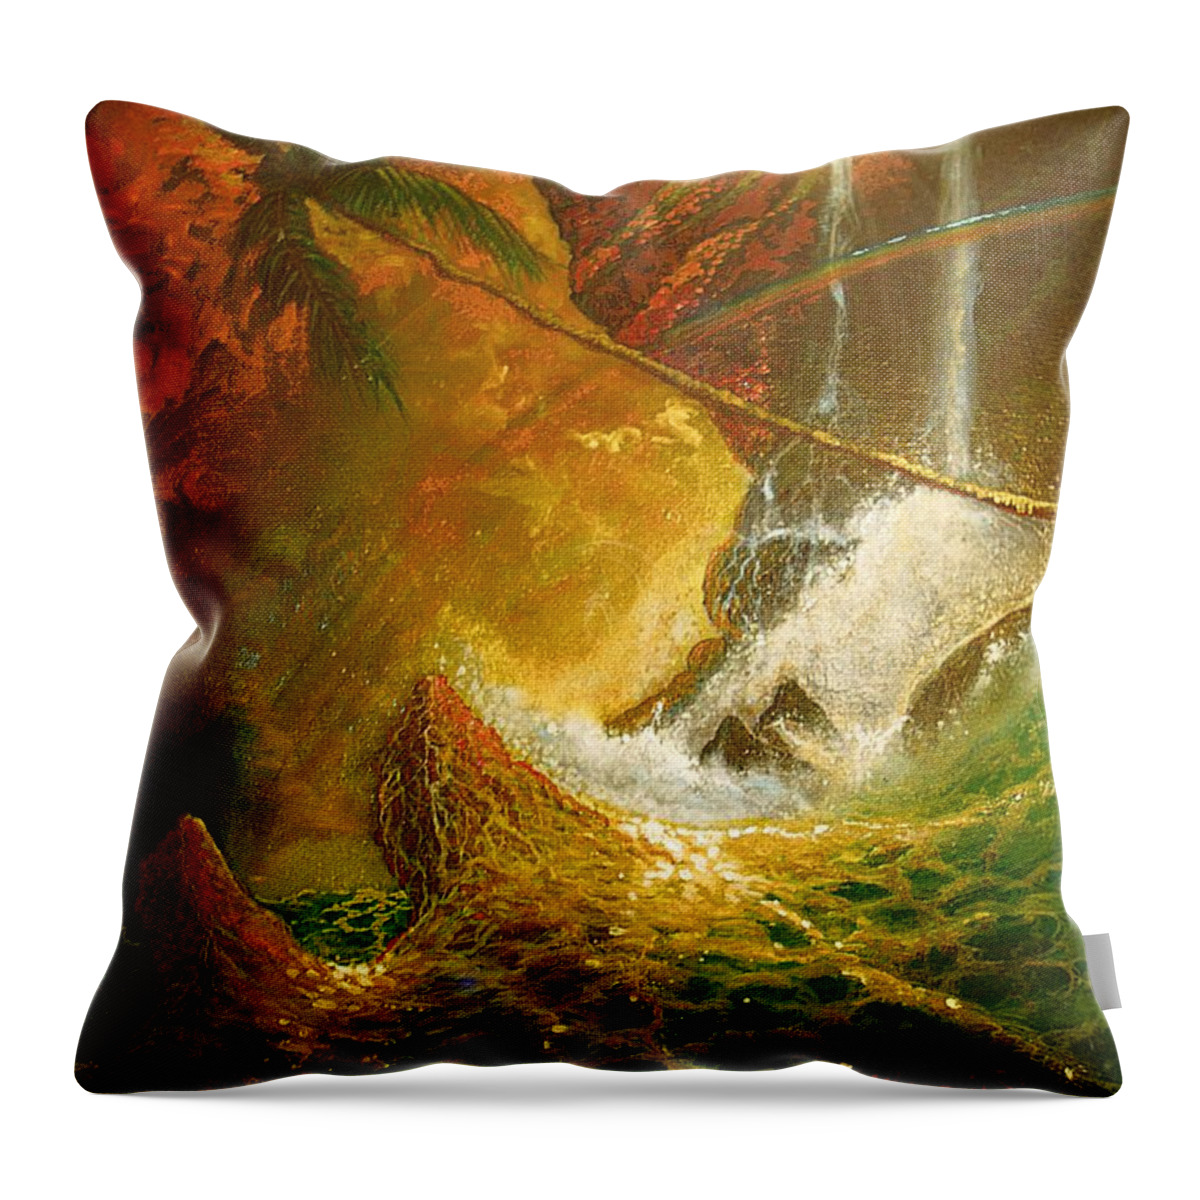 Hawaii Seascape Waterfall Throw Pillow featuring the painting Hawaii Sescape Waterfall Sunset by Leland Castro